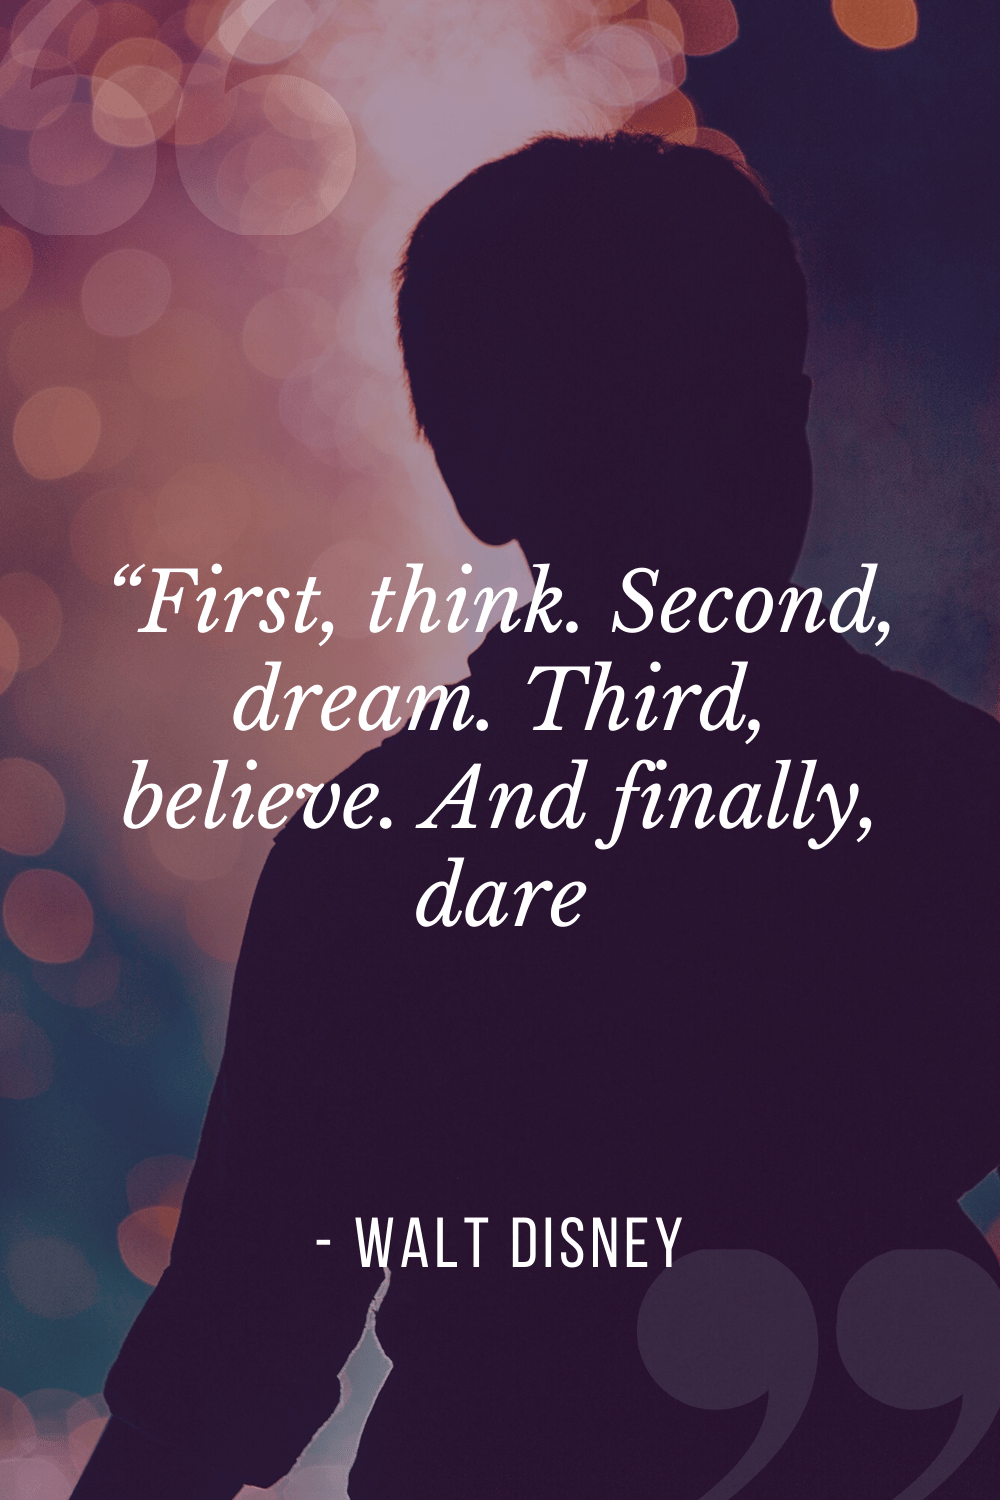 “First, think. Second, dream. Third, believe. And finally, dare”, Walt Disney